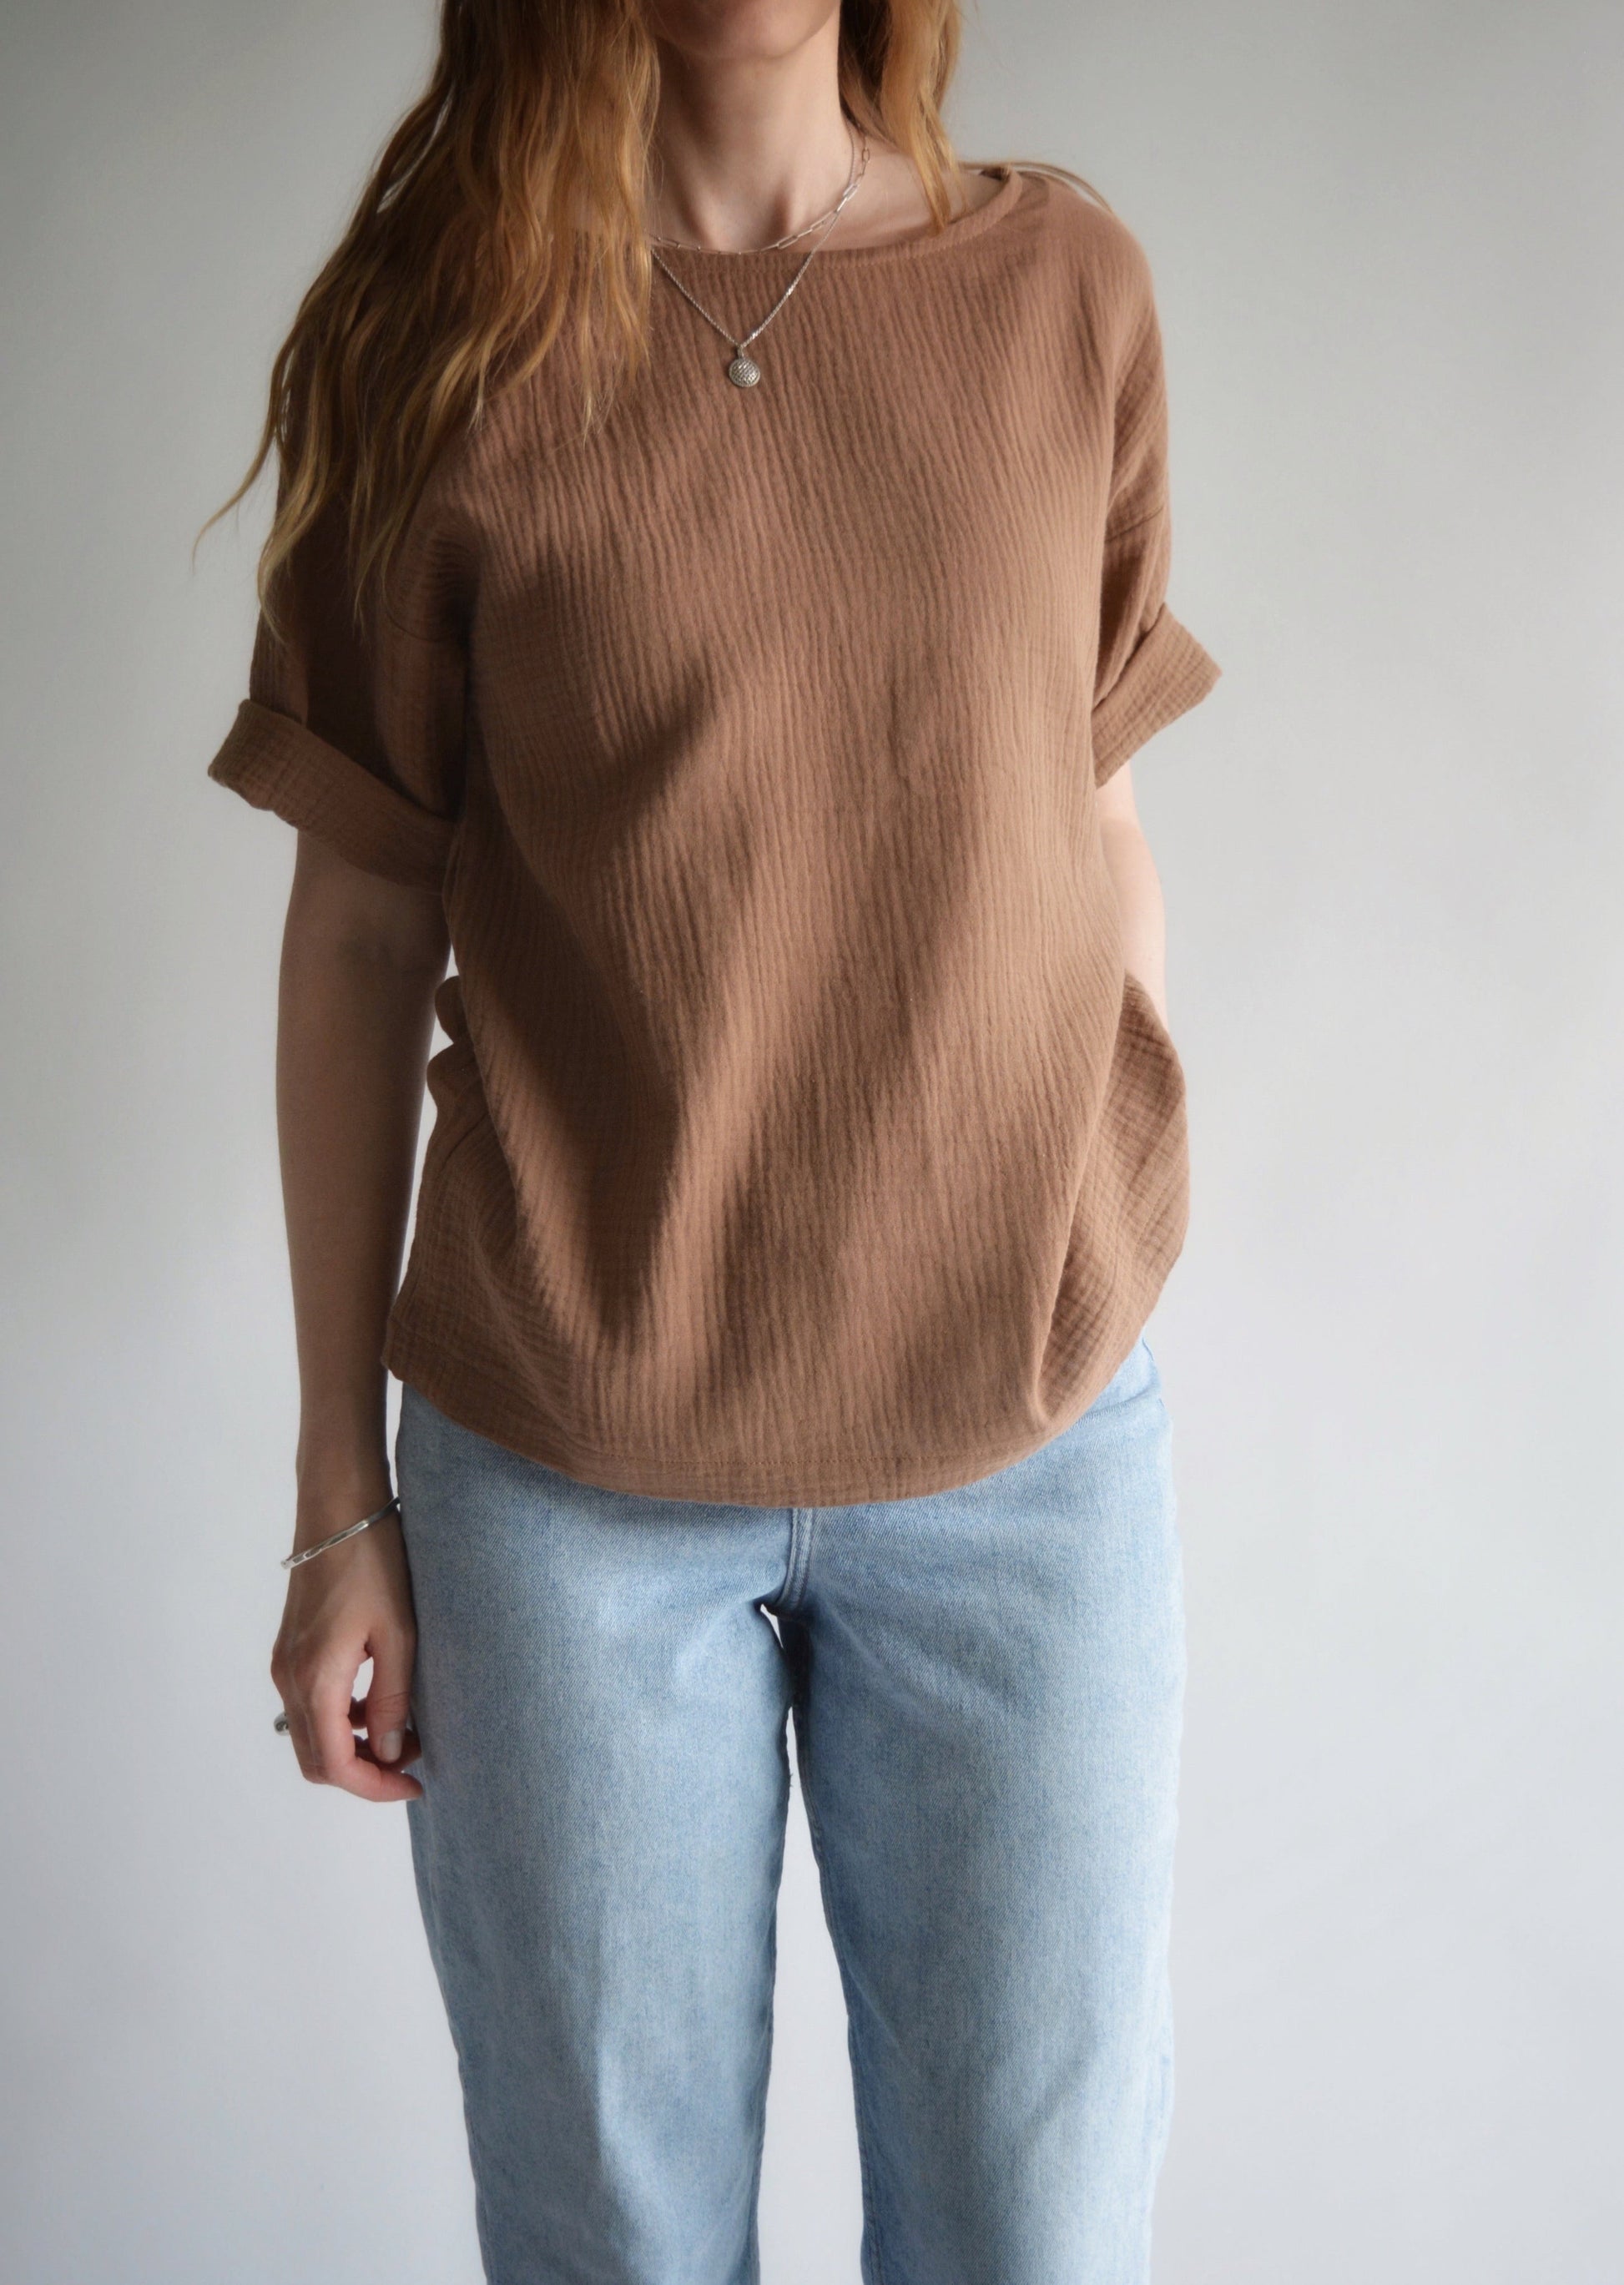 Cotton T-Shirt in Chestnut Elegance (Brown) color